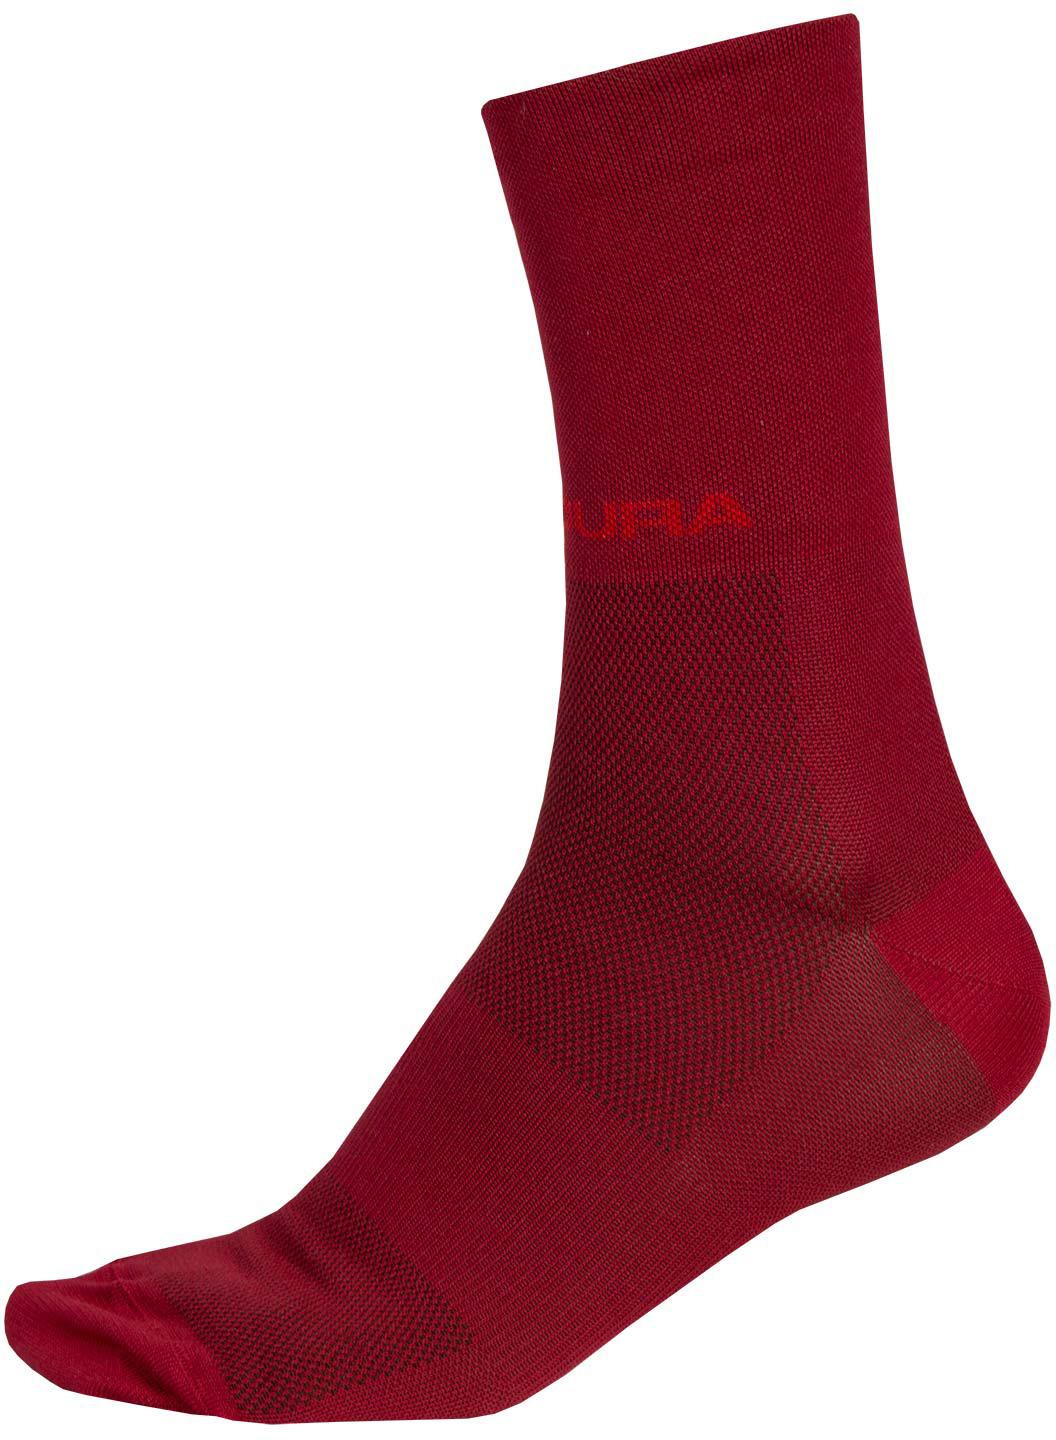 Endura Pro Sl Cycling Sock Ii - Red